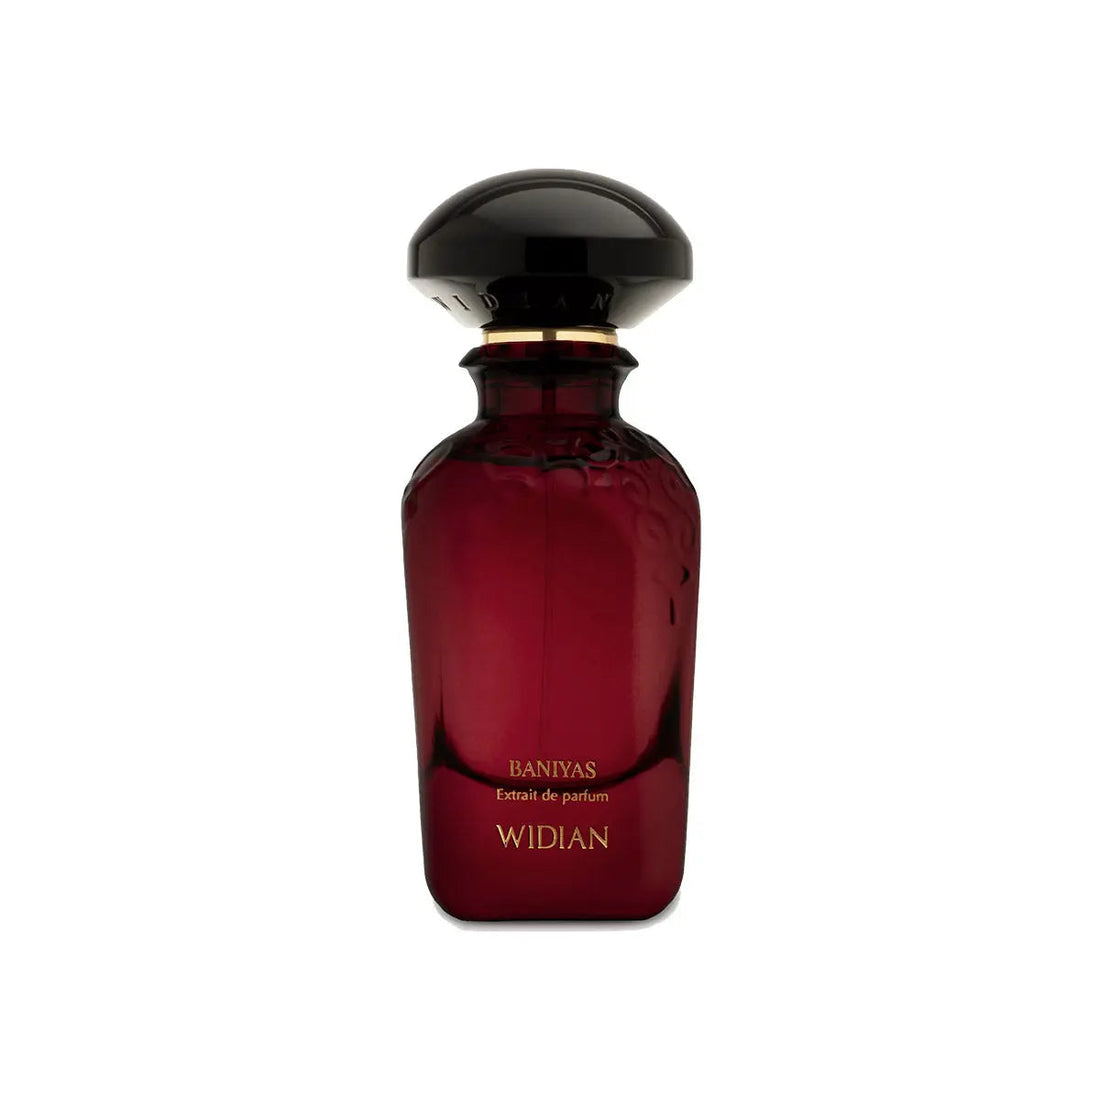 Baniyas Widian Perfume Extract - 50 ml